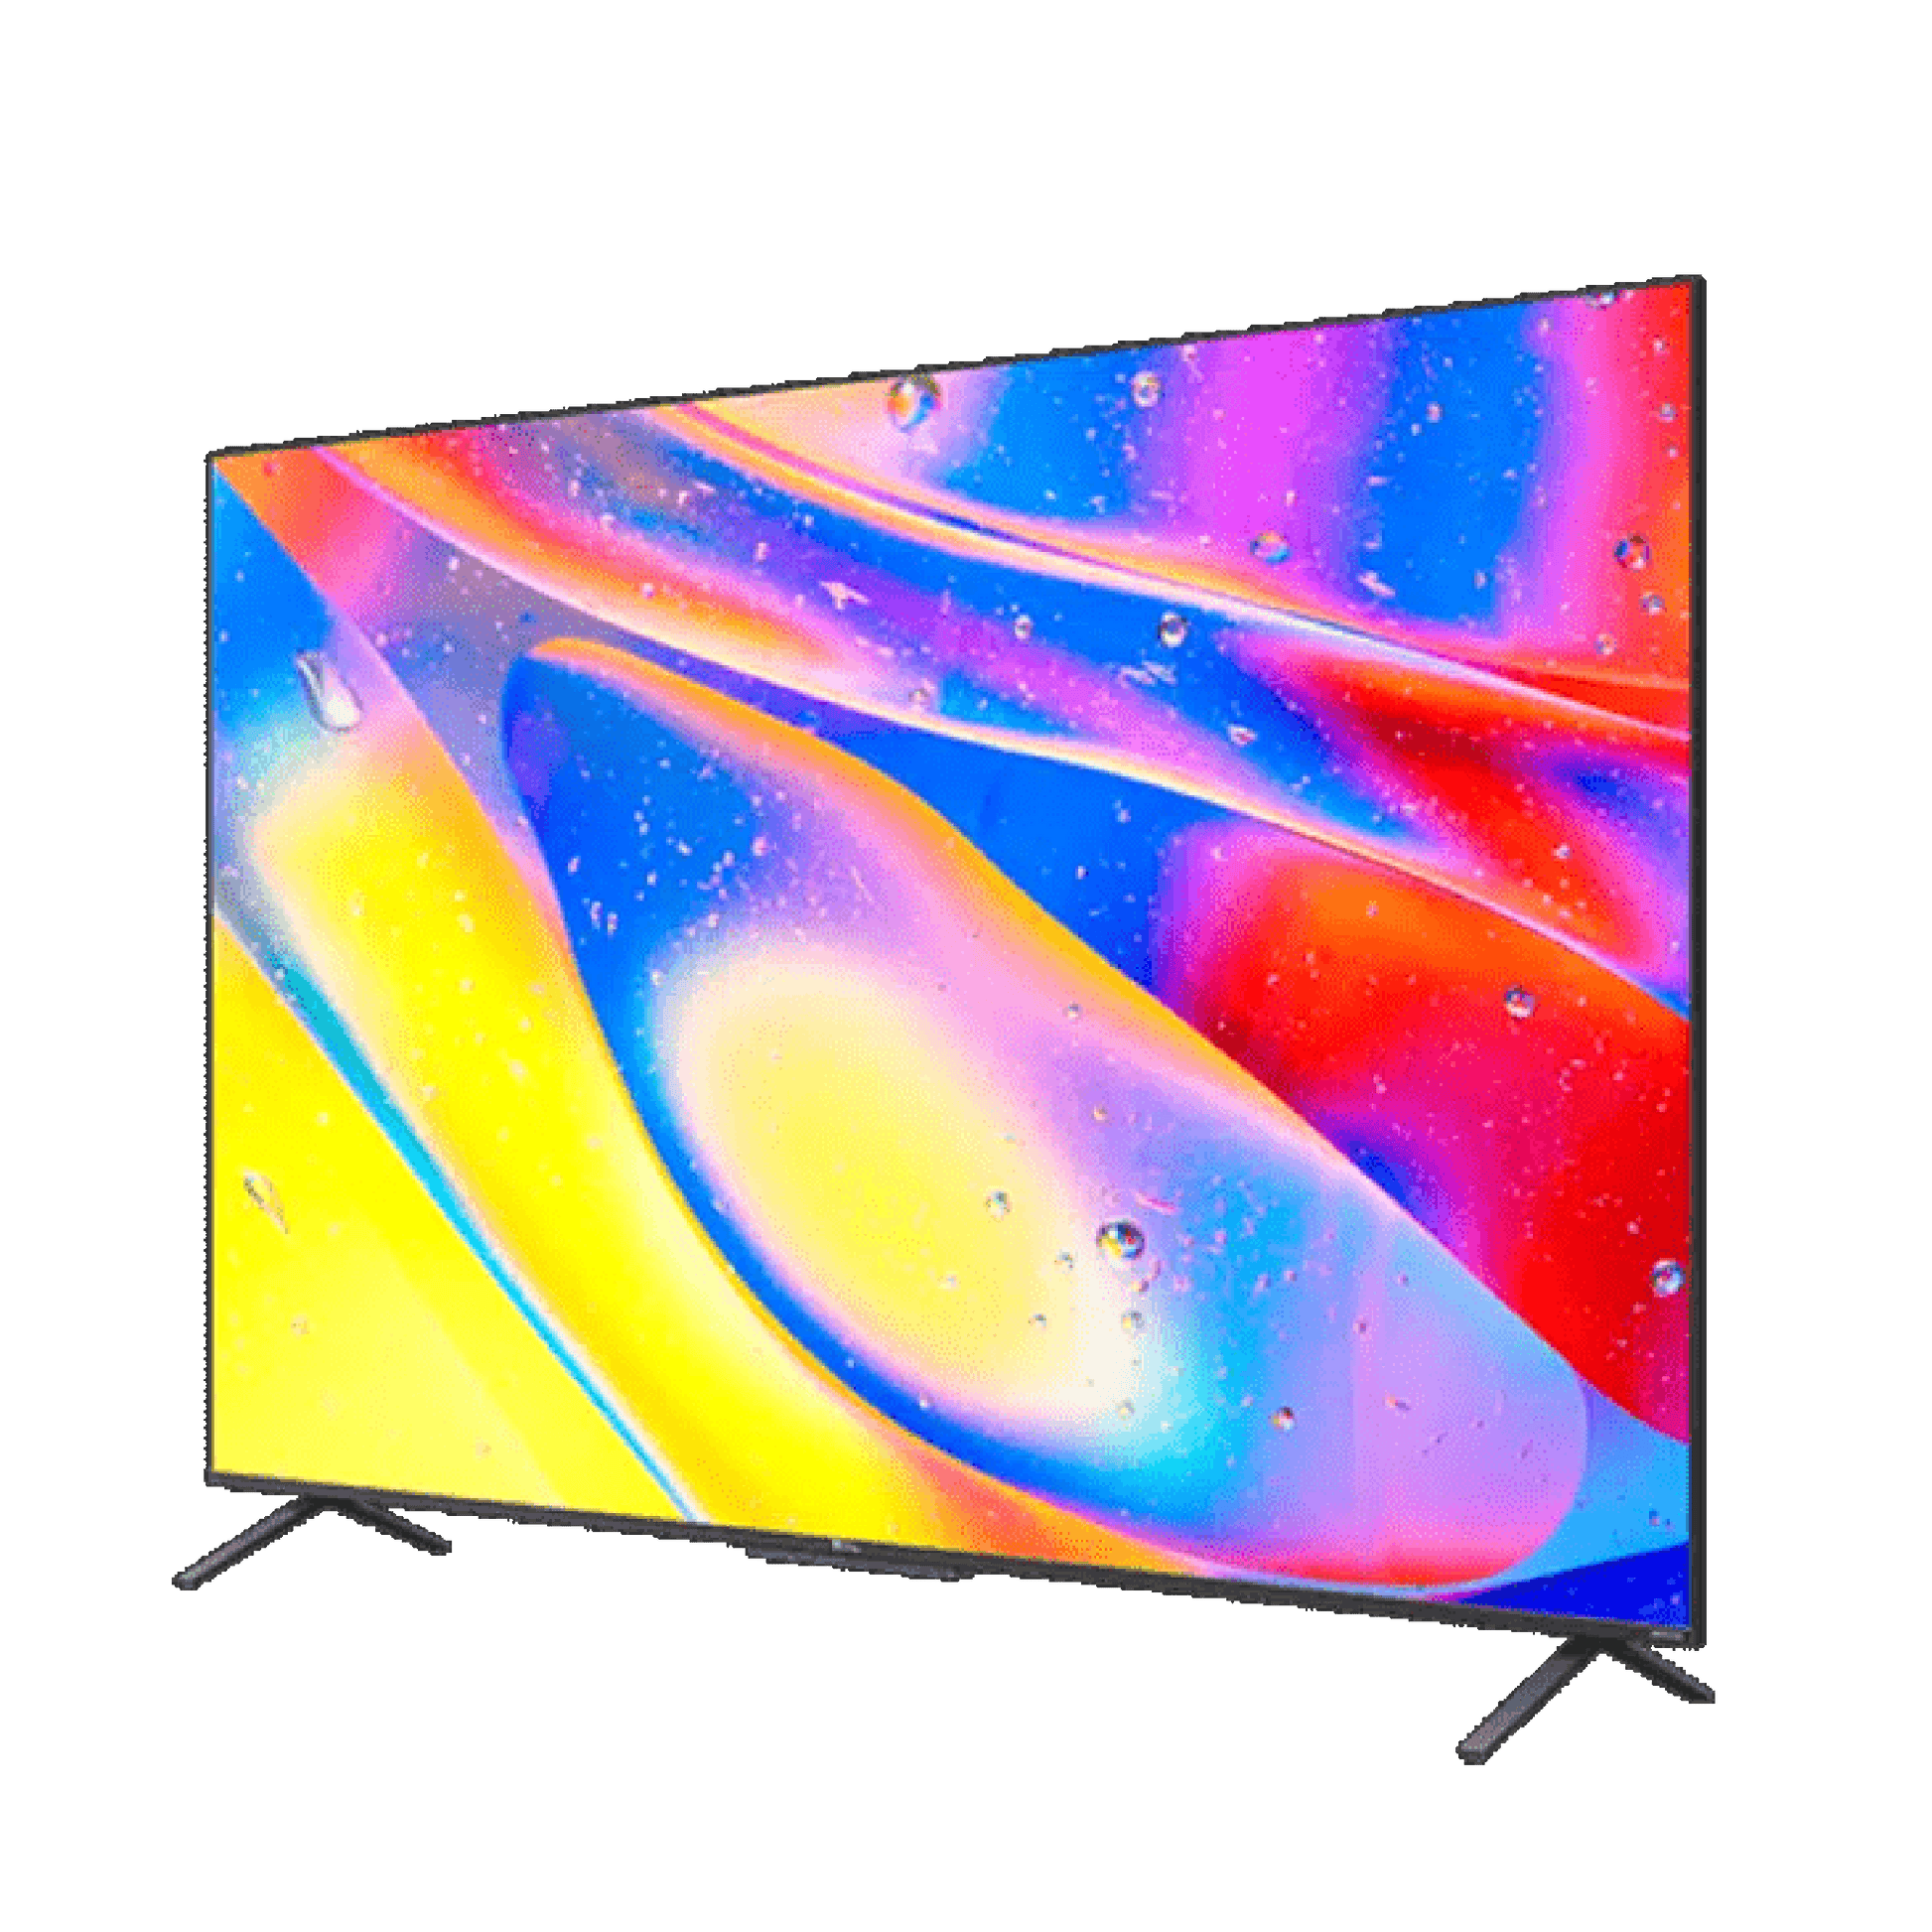 TCL 55 inch Smart QLED TV, 55C635